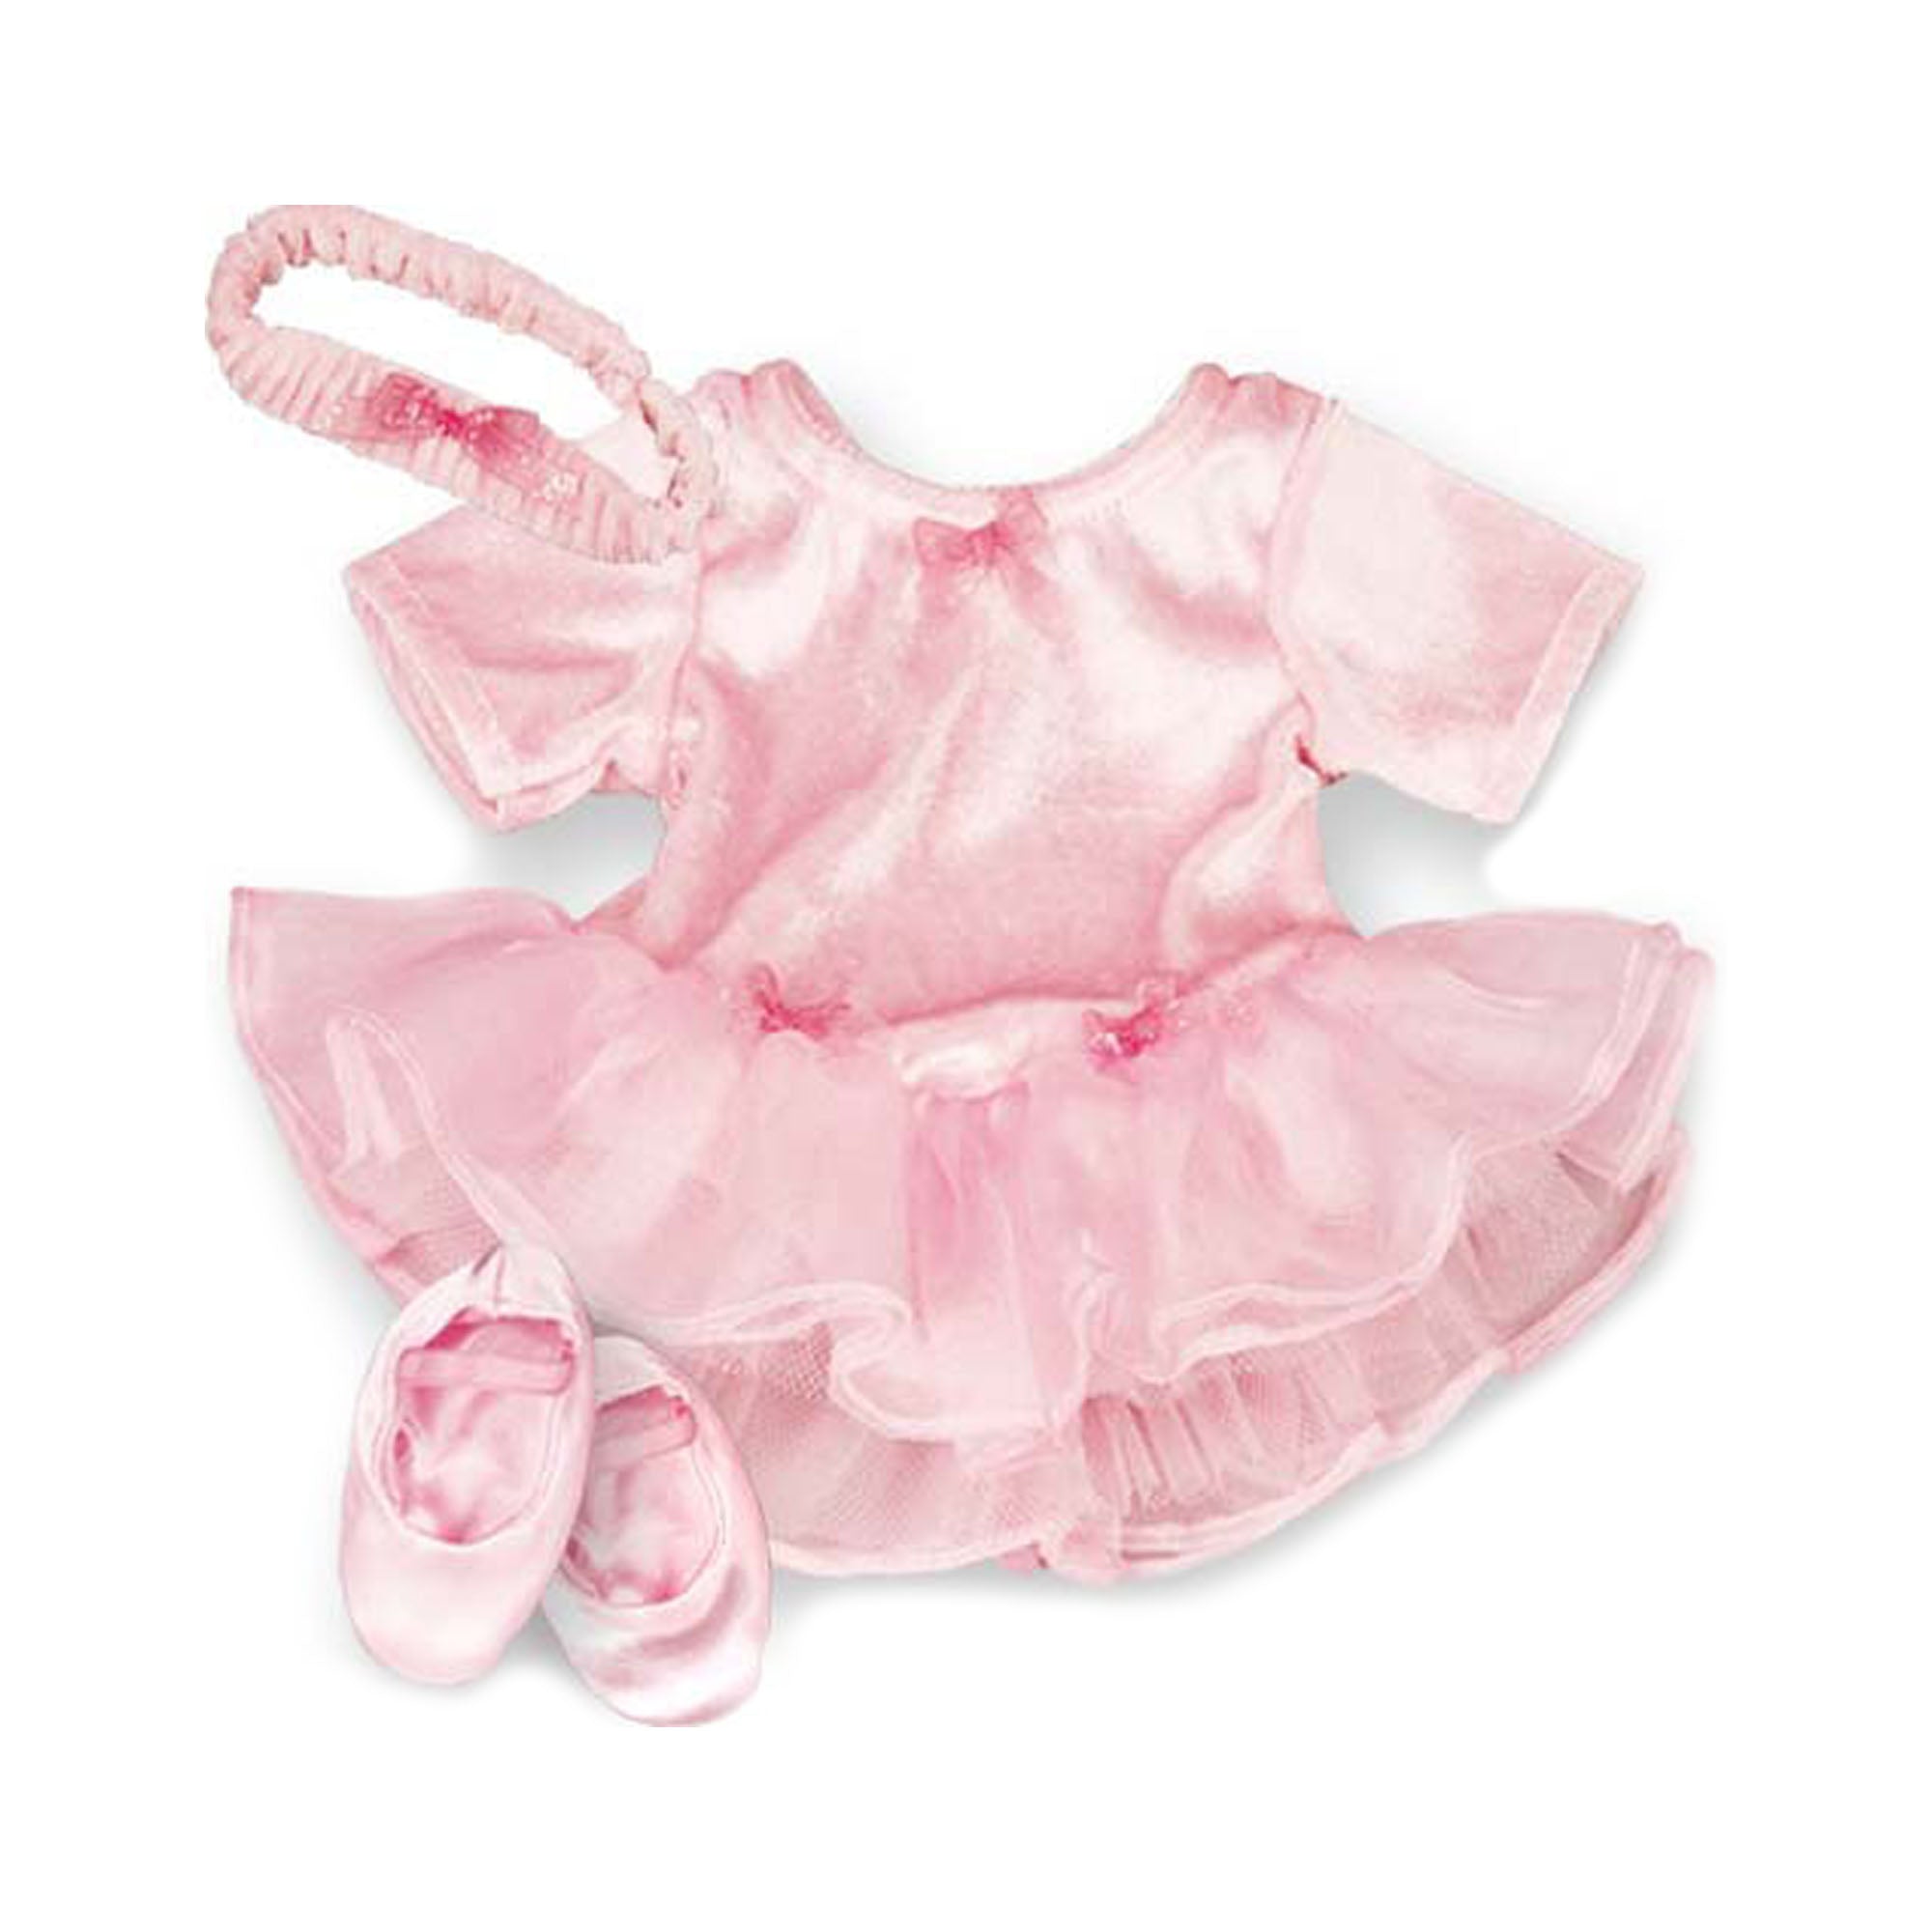 Sophia's 3 Piece Ballet Outfit Set for 15'' Dolls, Light Pink